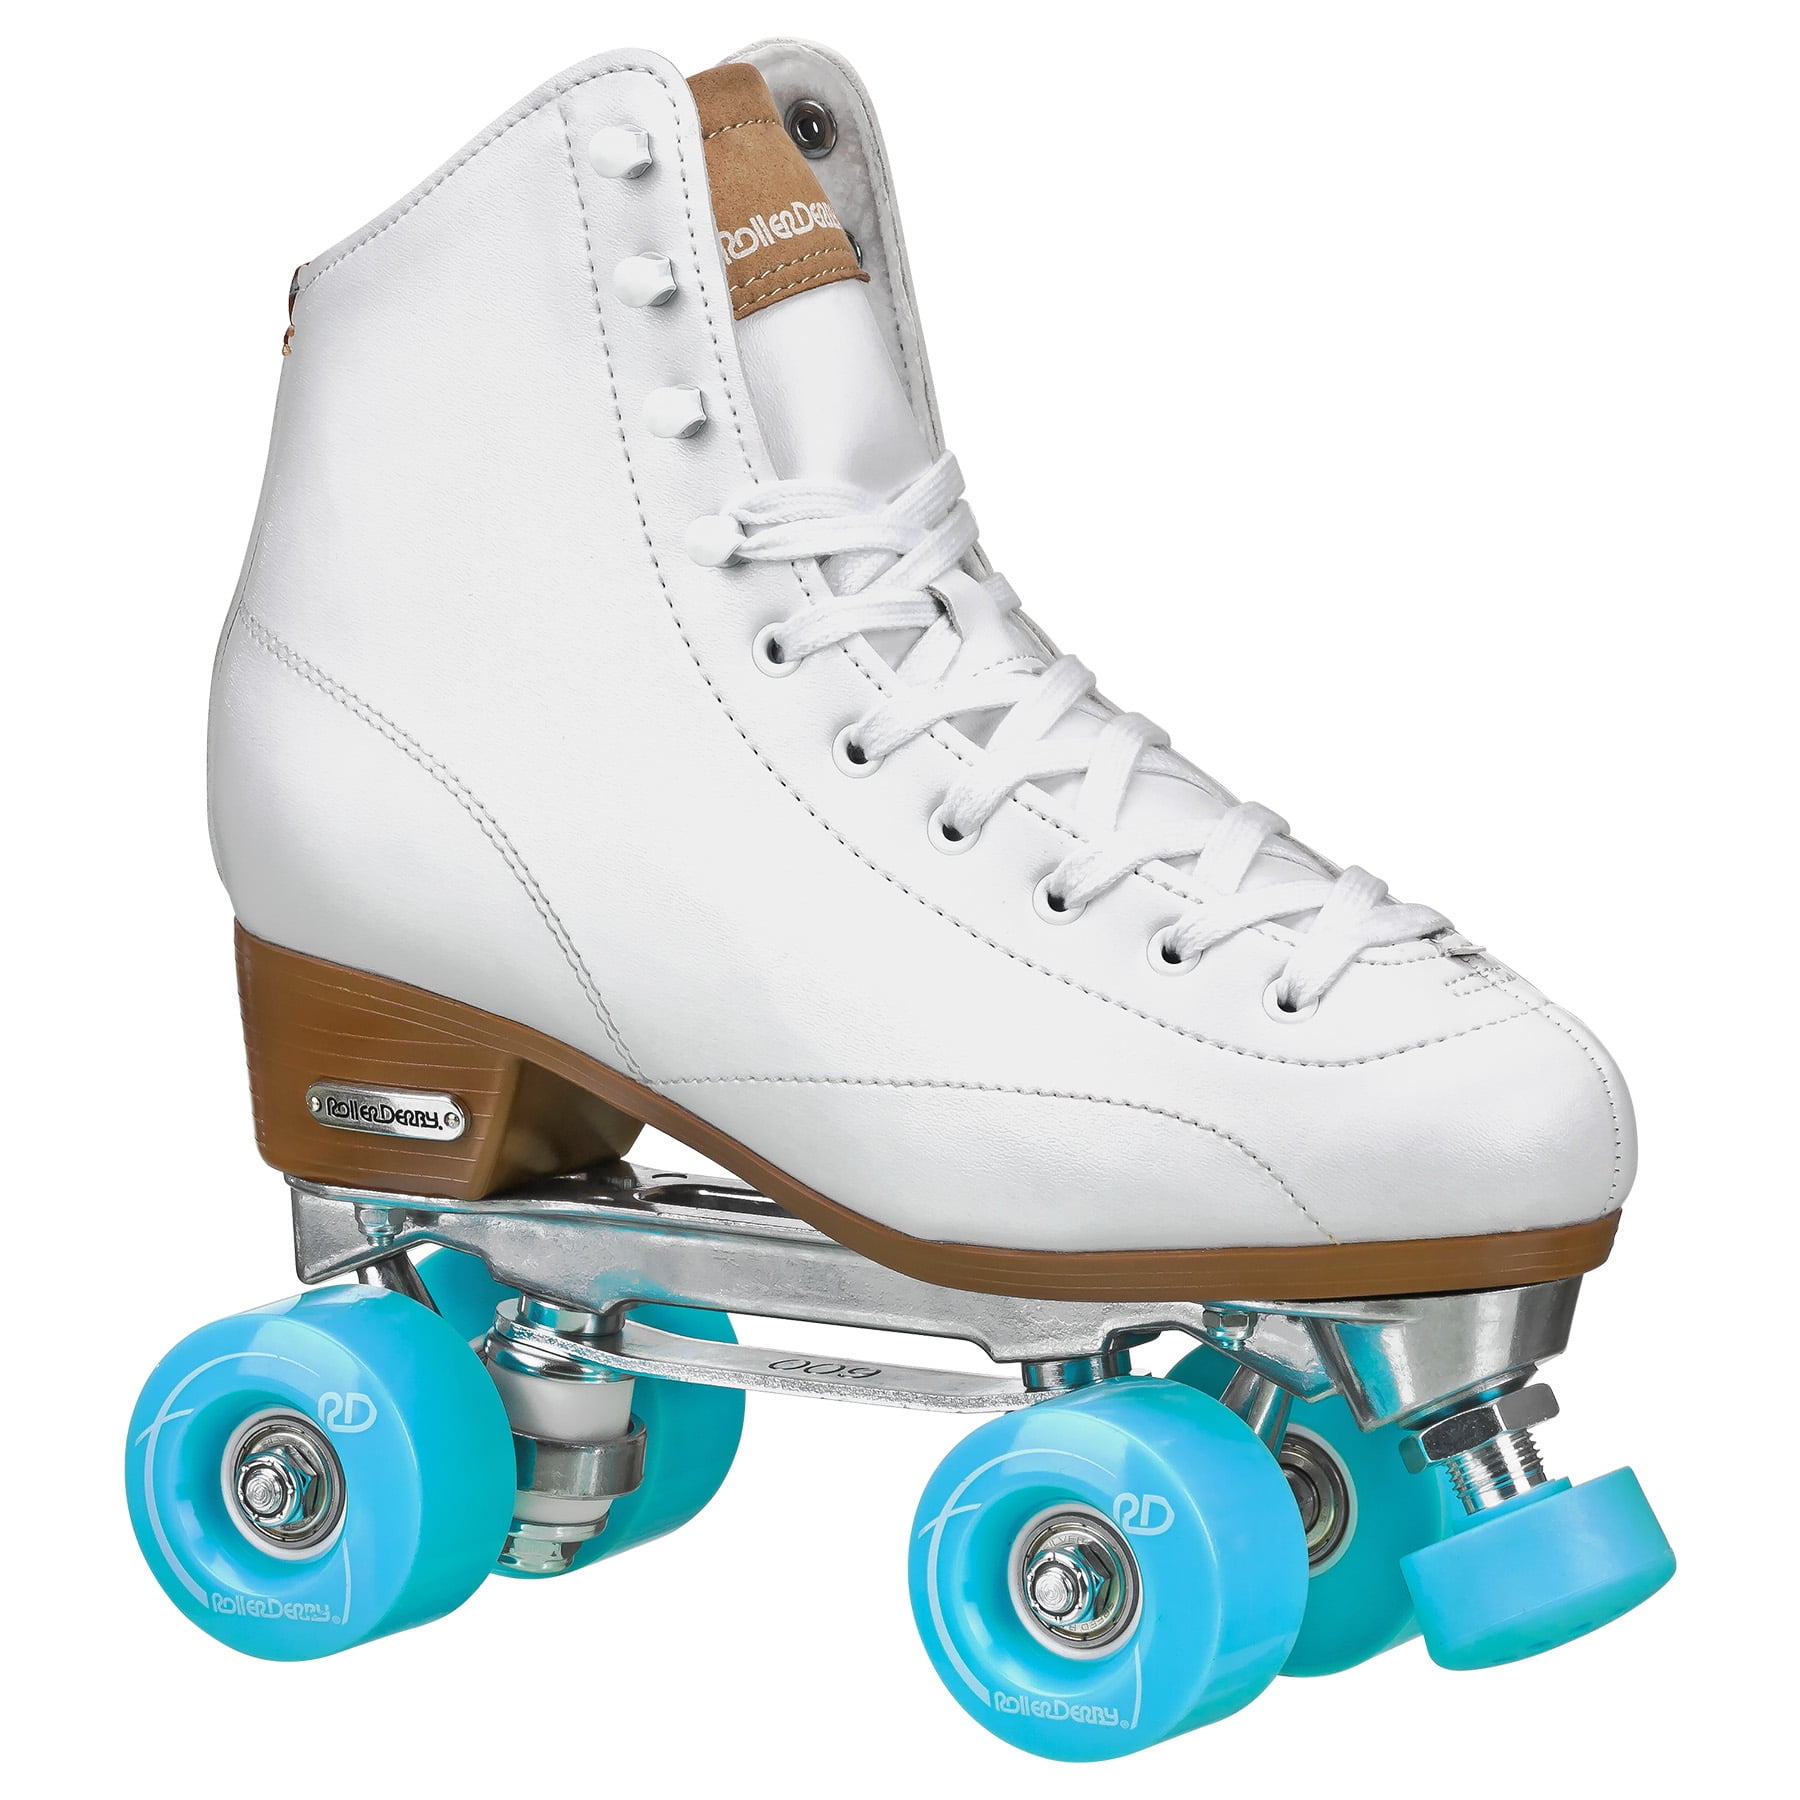 LEAFIS Roller Skates Classic High-top for Adult Outdoor Skating Light-Up Four-Wheel Roller Skates Shiny Roller Skates for Women 